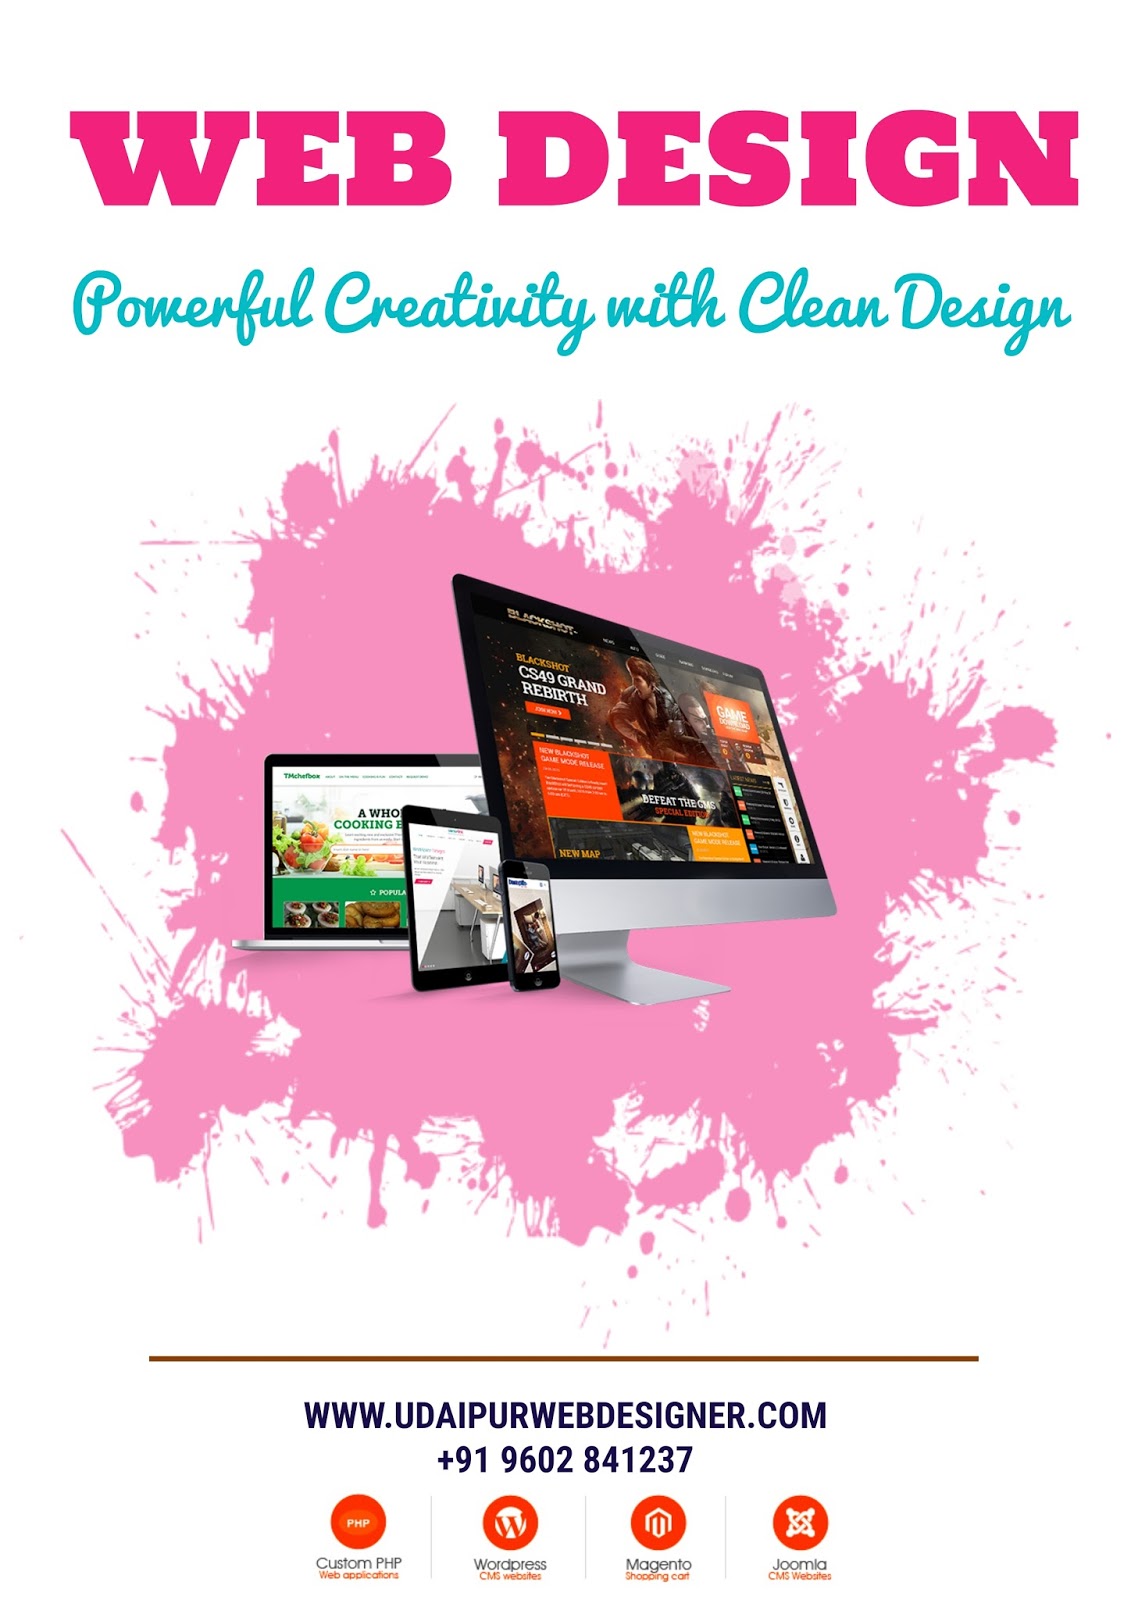 Udaipur Web Design: Web Banner Design Ideas